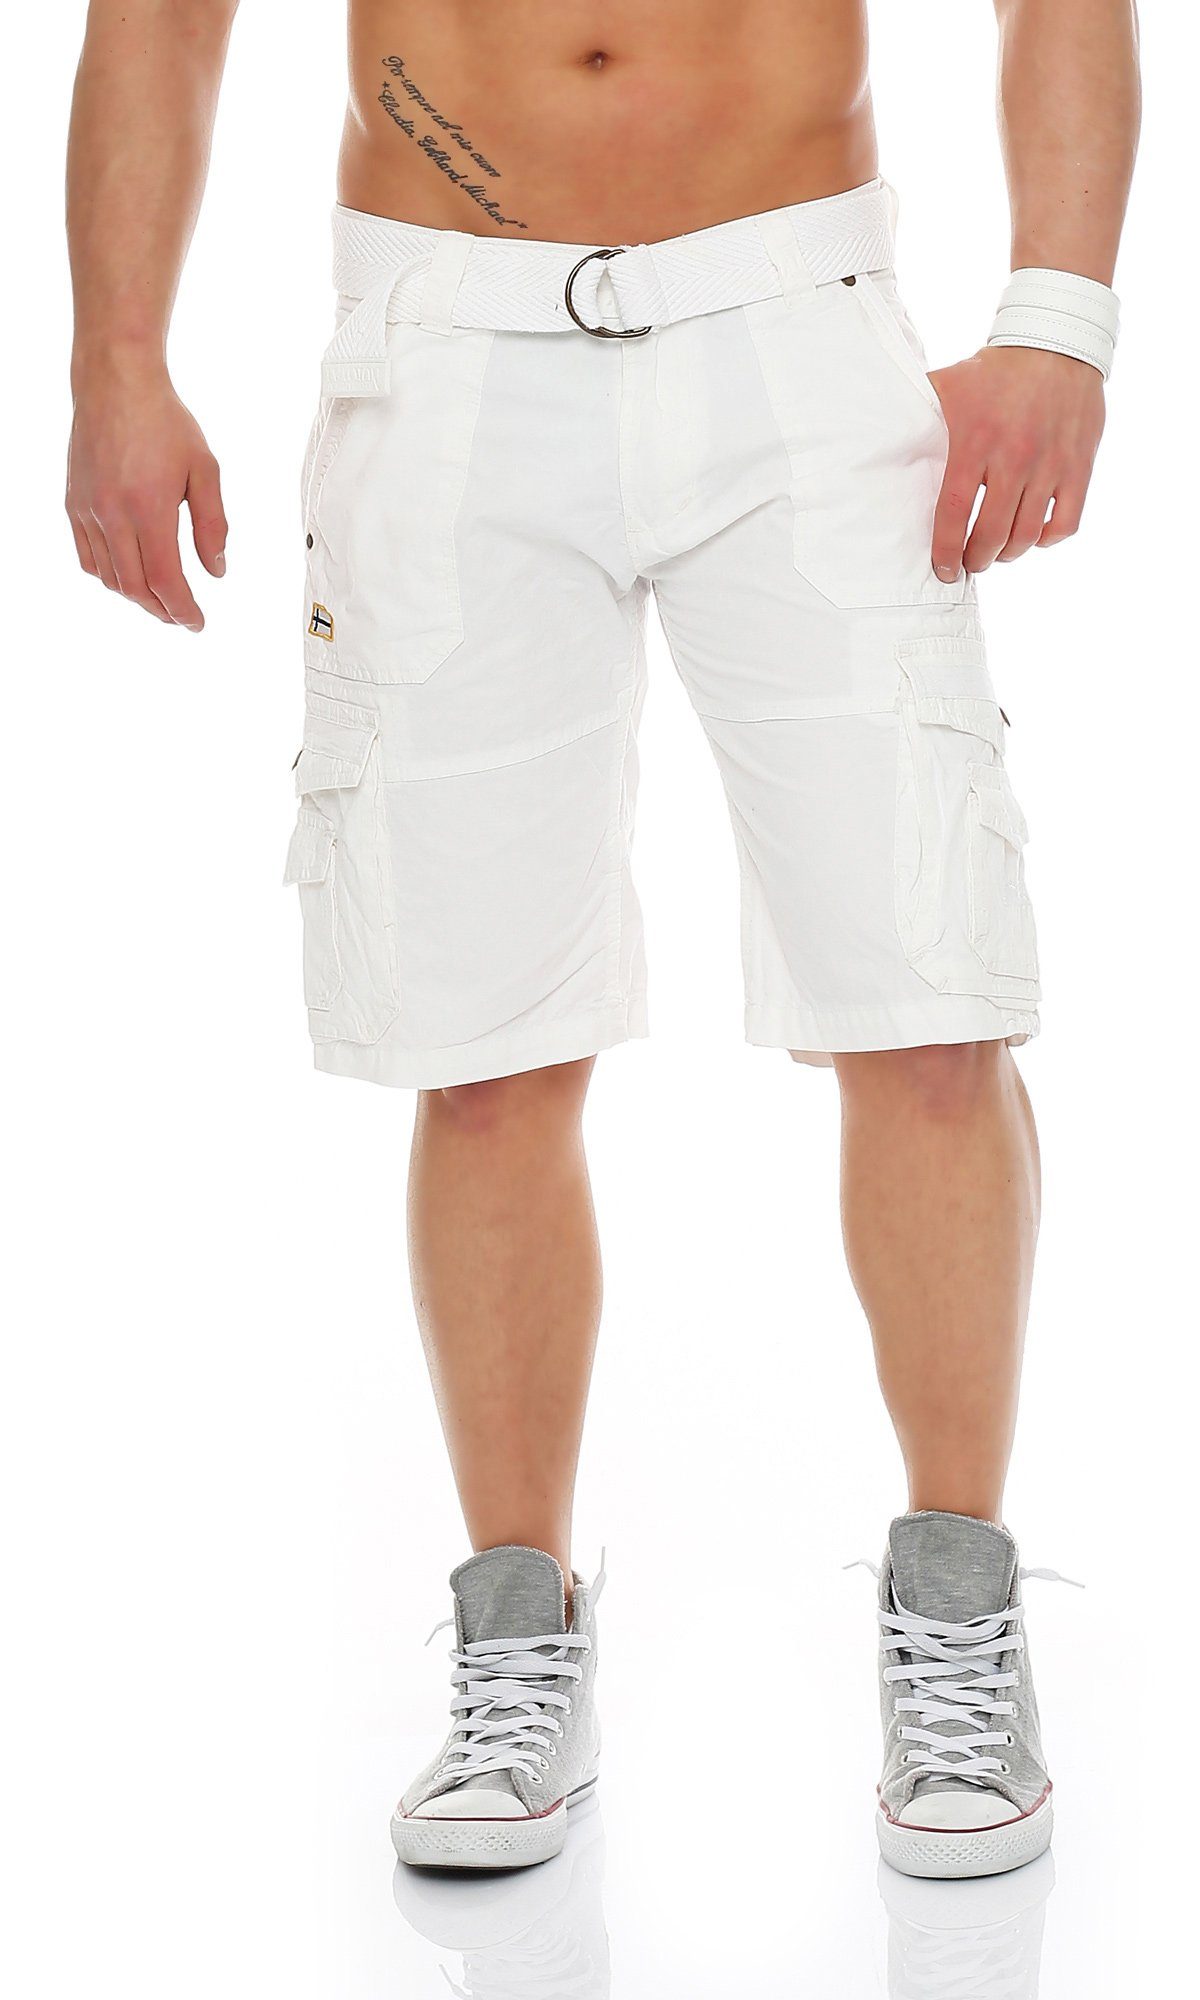 abnehmbarem kurze Hose, Weiss Norway Shorts Gürtel) PARACHUTE Shorts, unifarben (mit Herren Geographical Cargoshorts